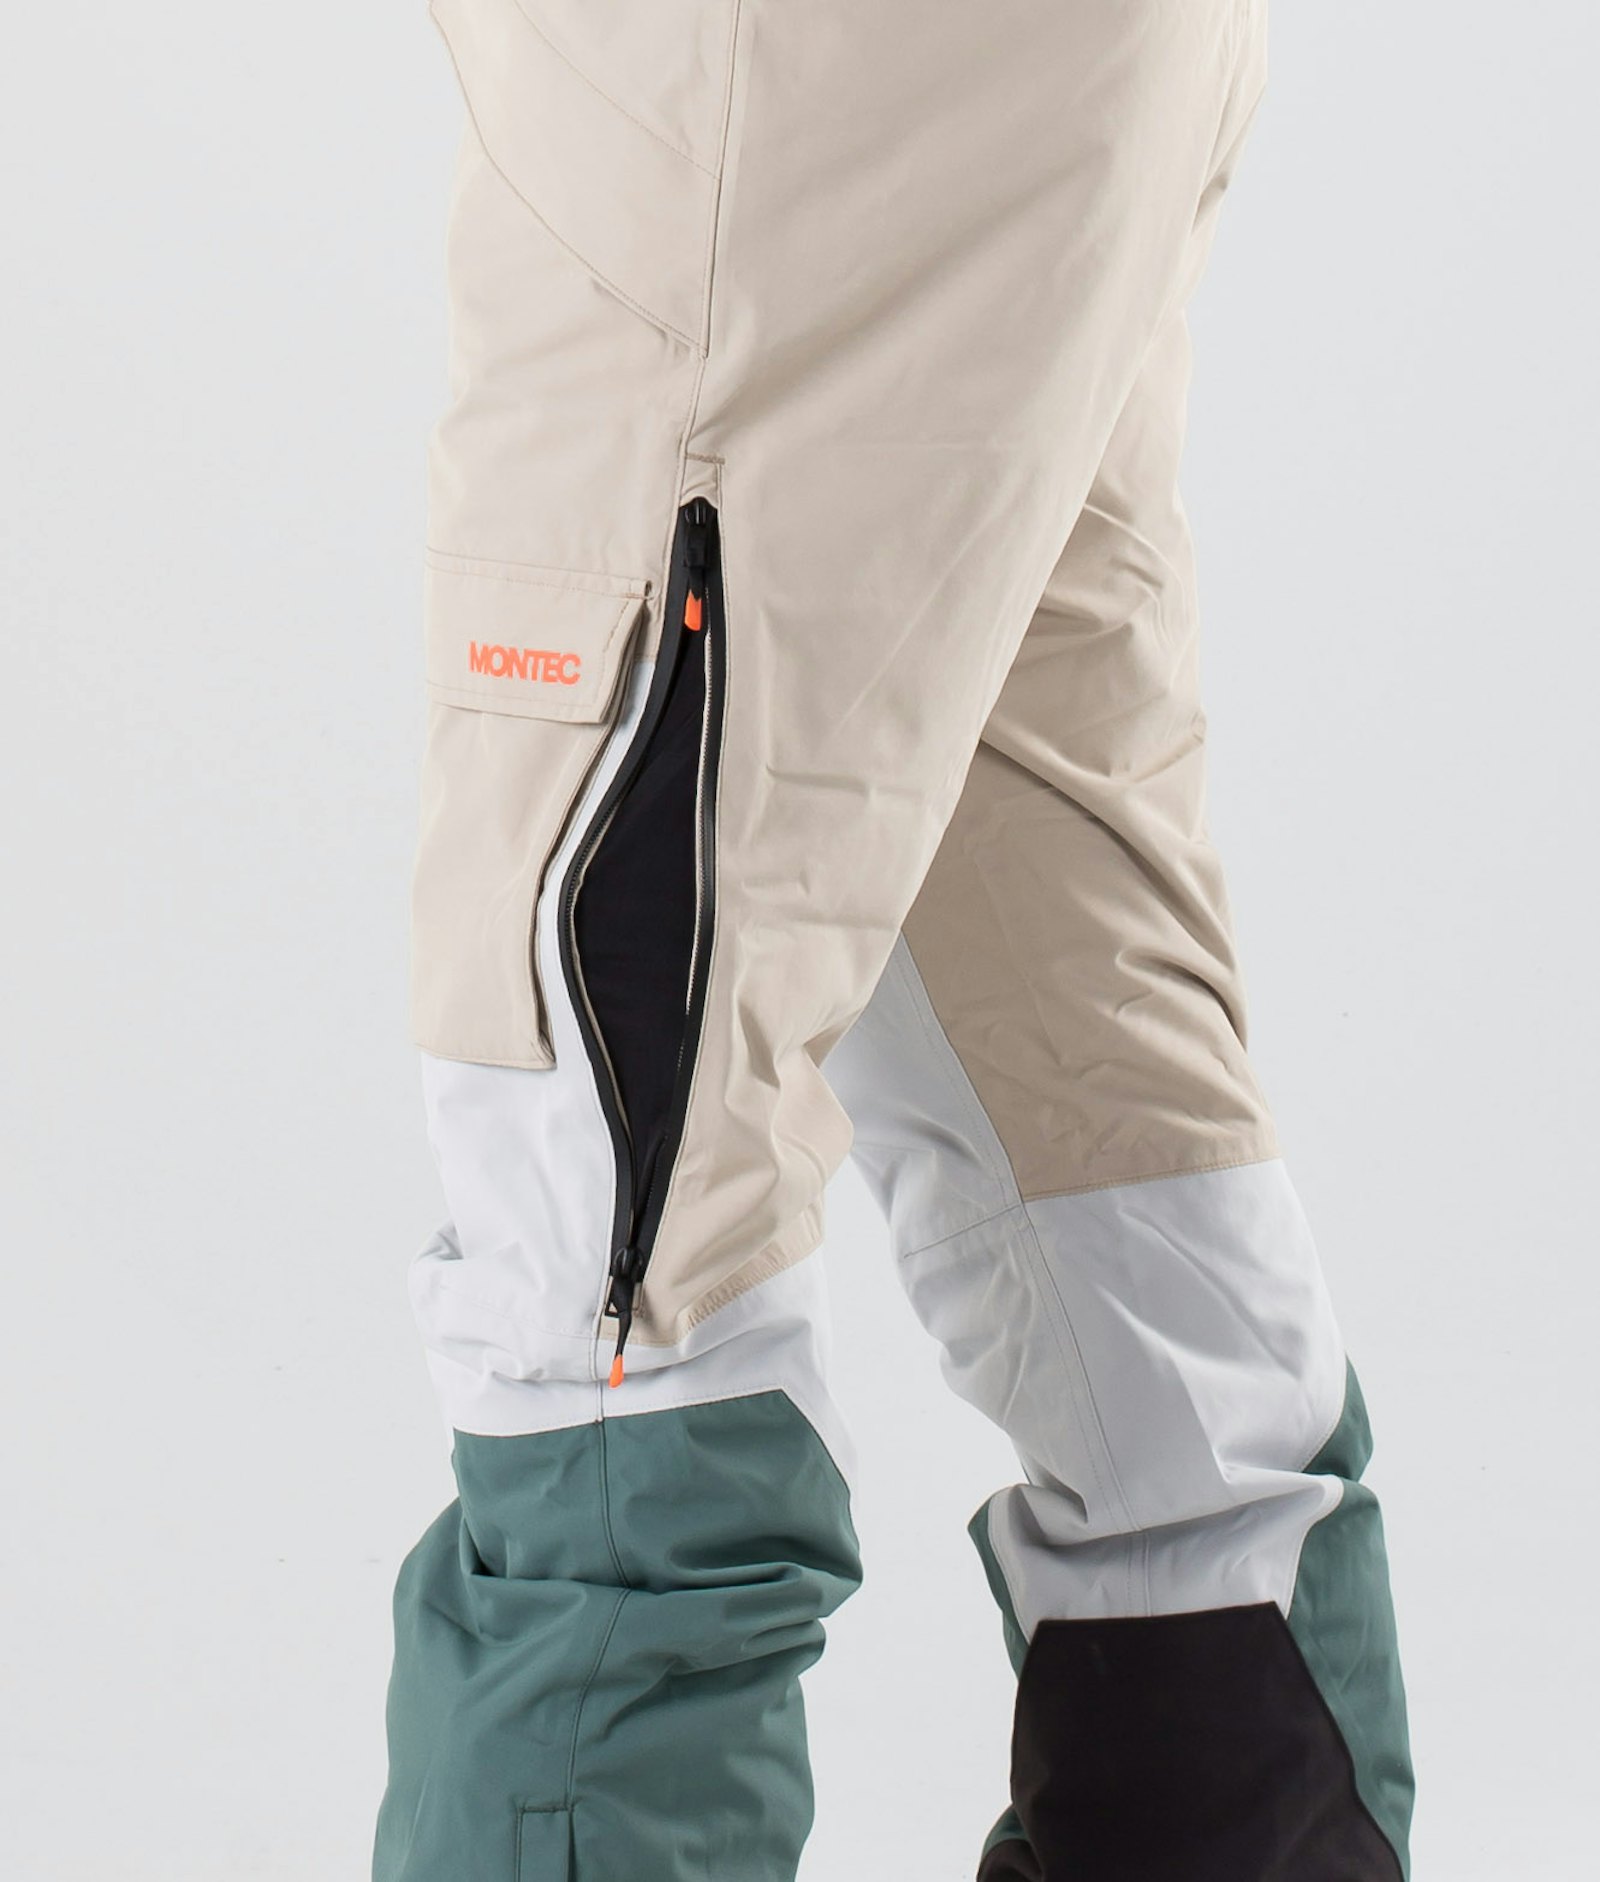 Montec Fawk 2019 Pantalon de Snowboard Homme Desert Light Grey Atlantic